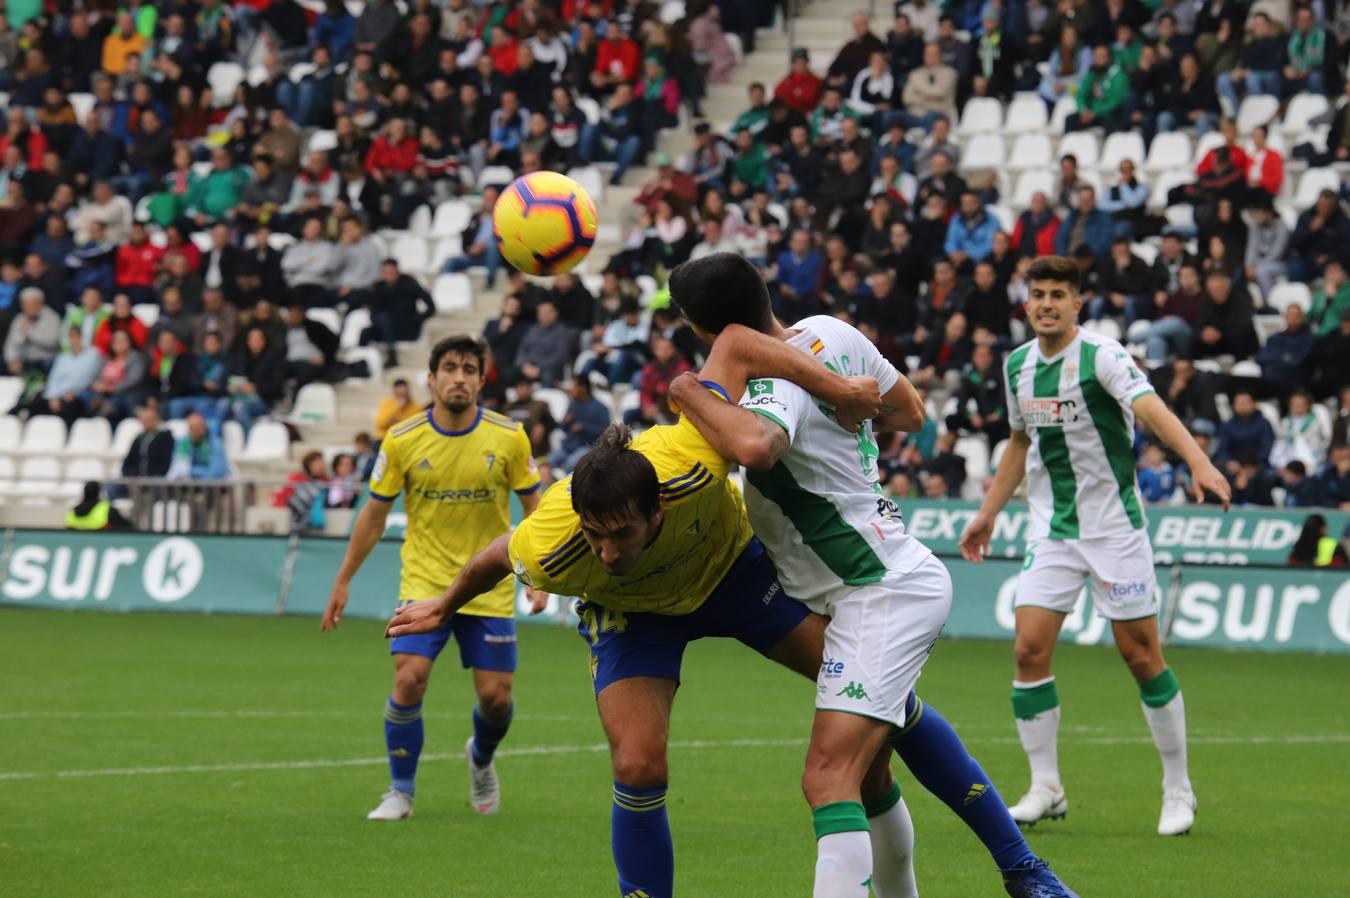 FOTOS: El Córdoba-Cádiz CF en imágenes